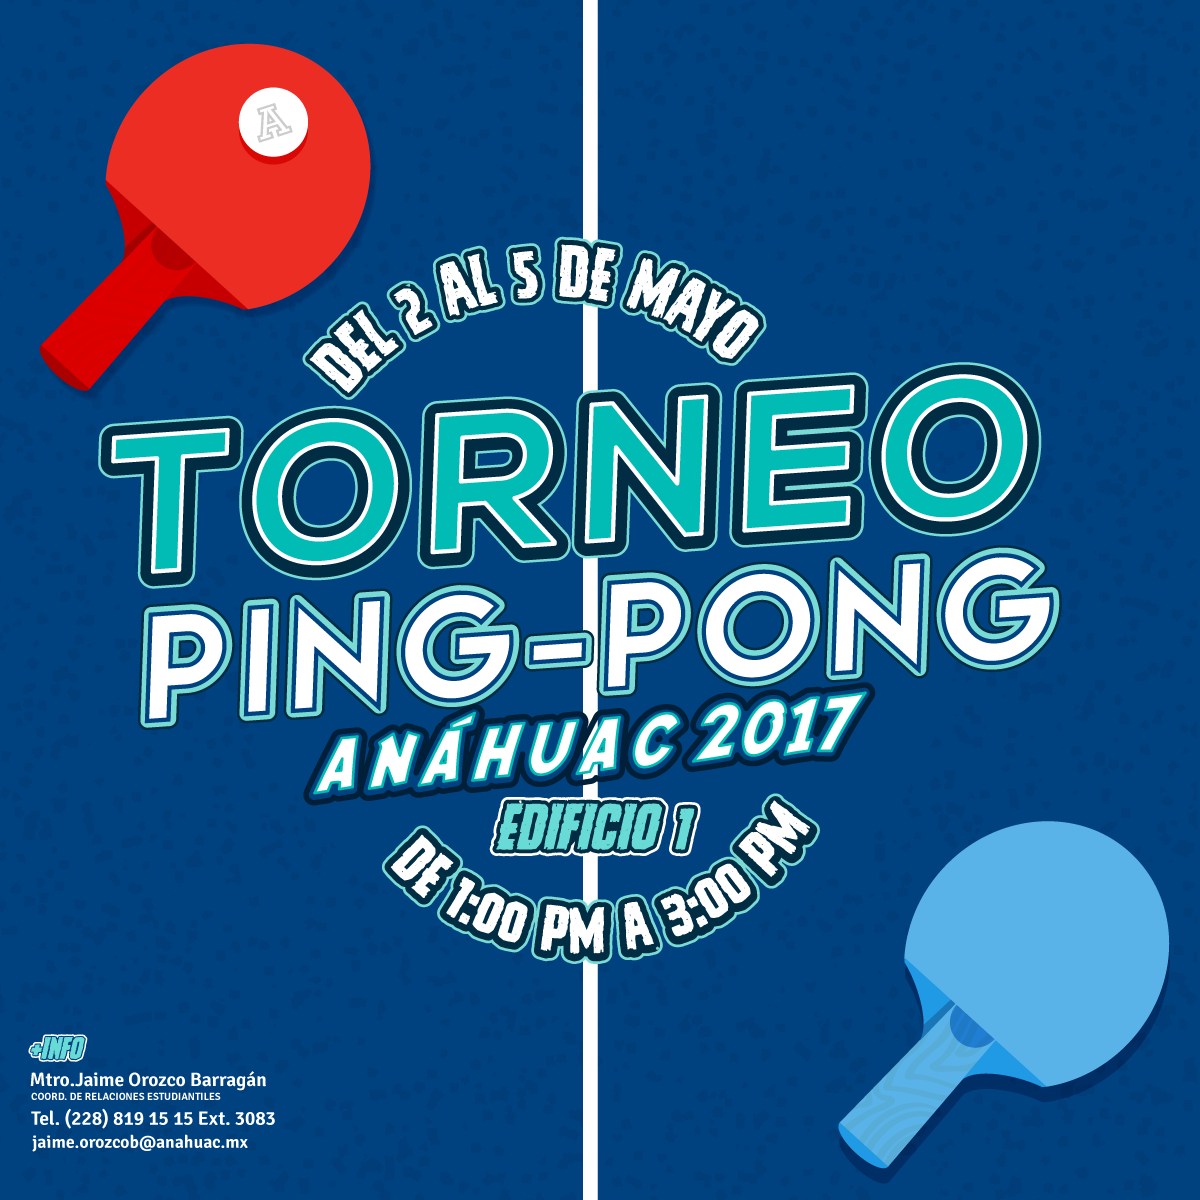 Torneo de Ping-Pong Anáhuac 2017